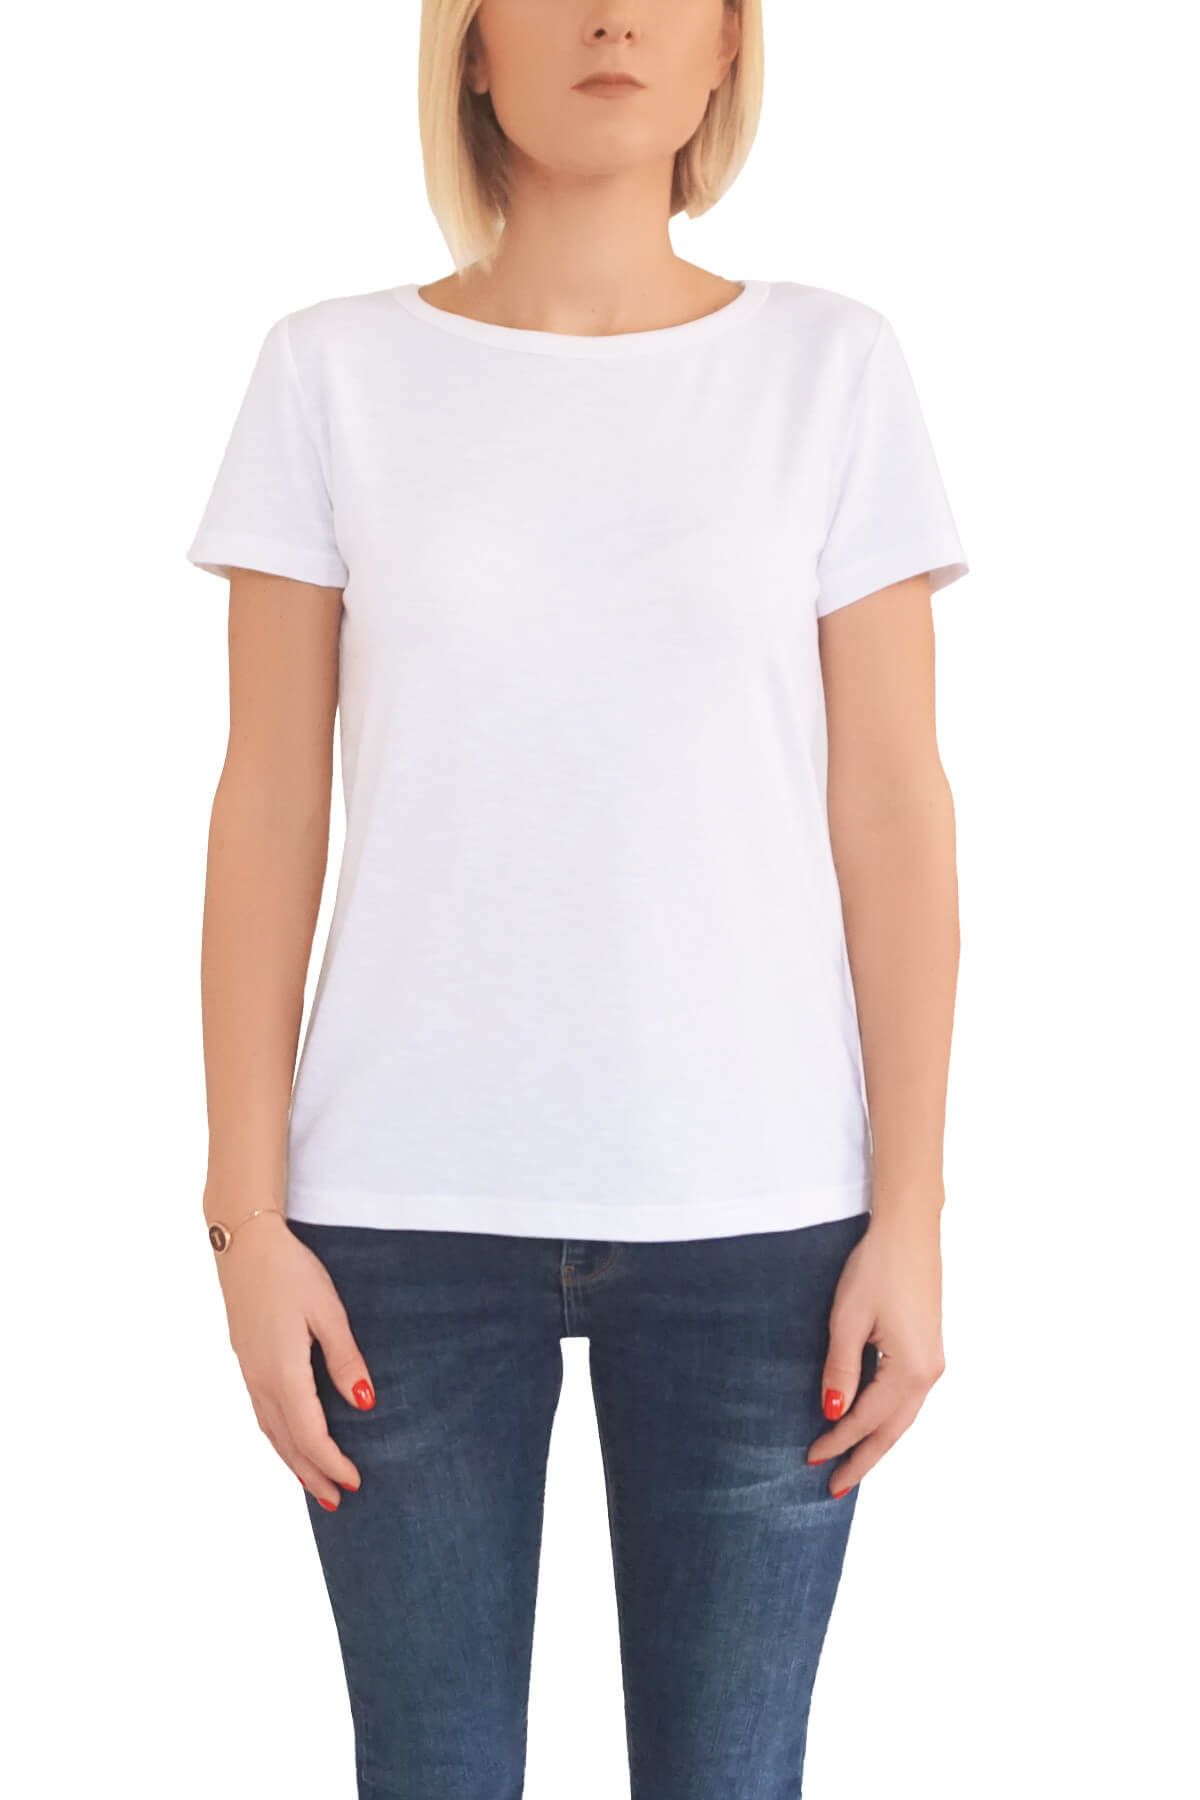 Mof Basics Kadın Beyaz T-Shirt BYT-B